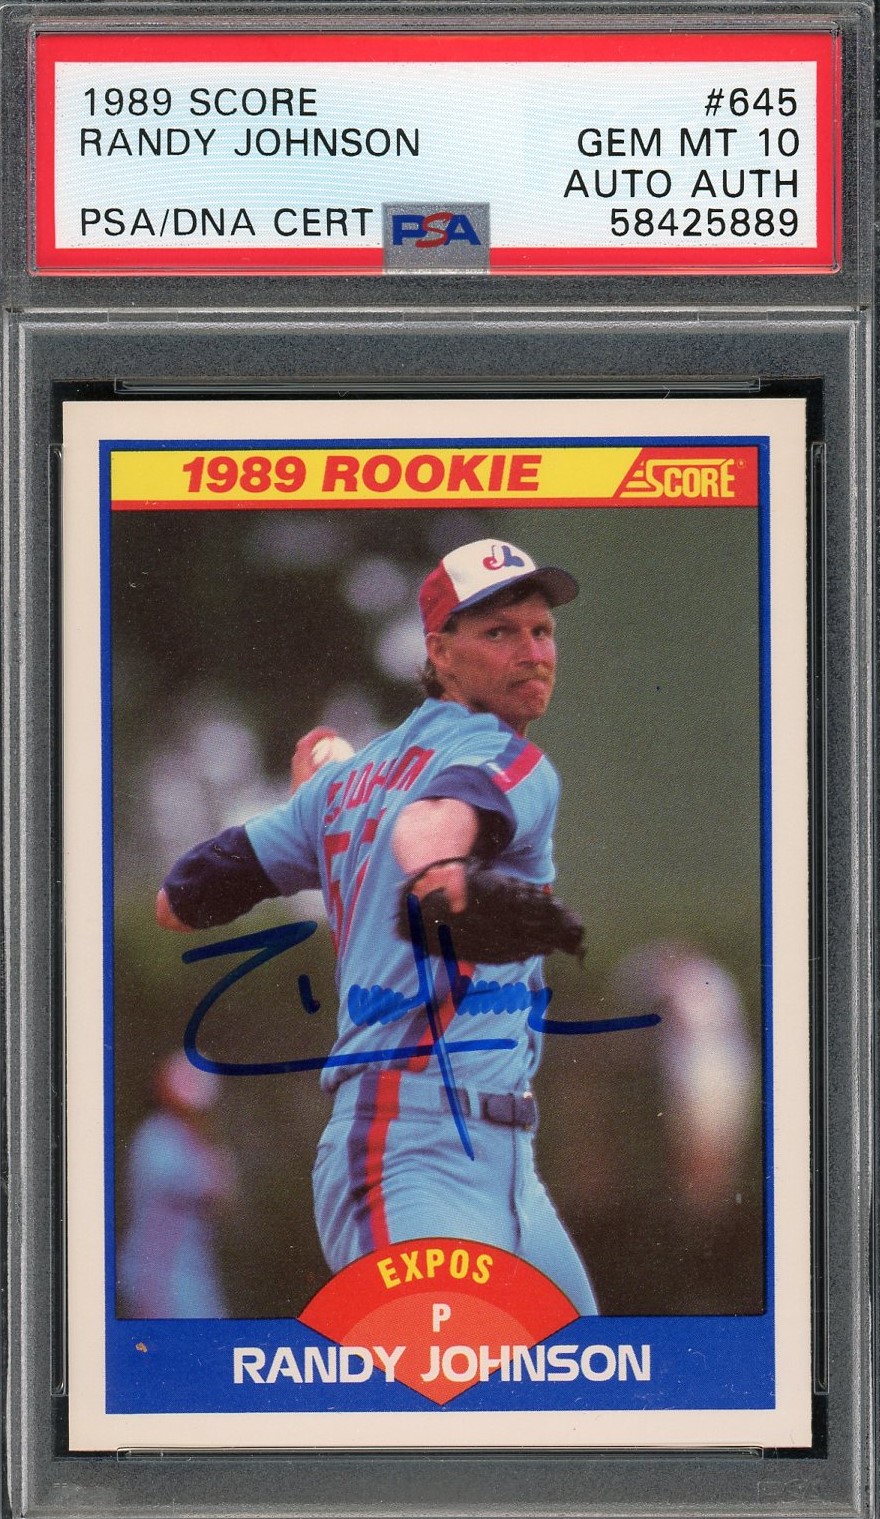 Randy Johnson 1989 Score Signed Rookie Card #645 Auto Graded PSA 10 58425889